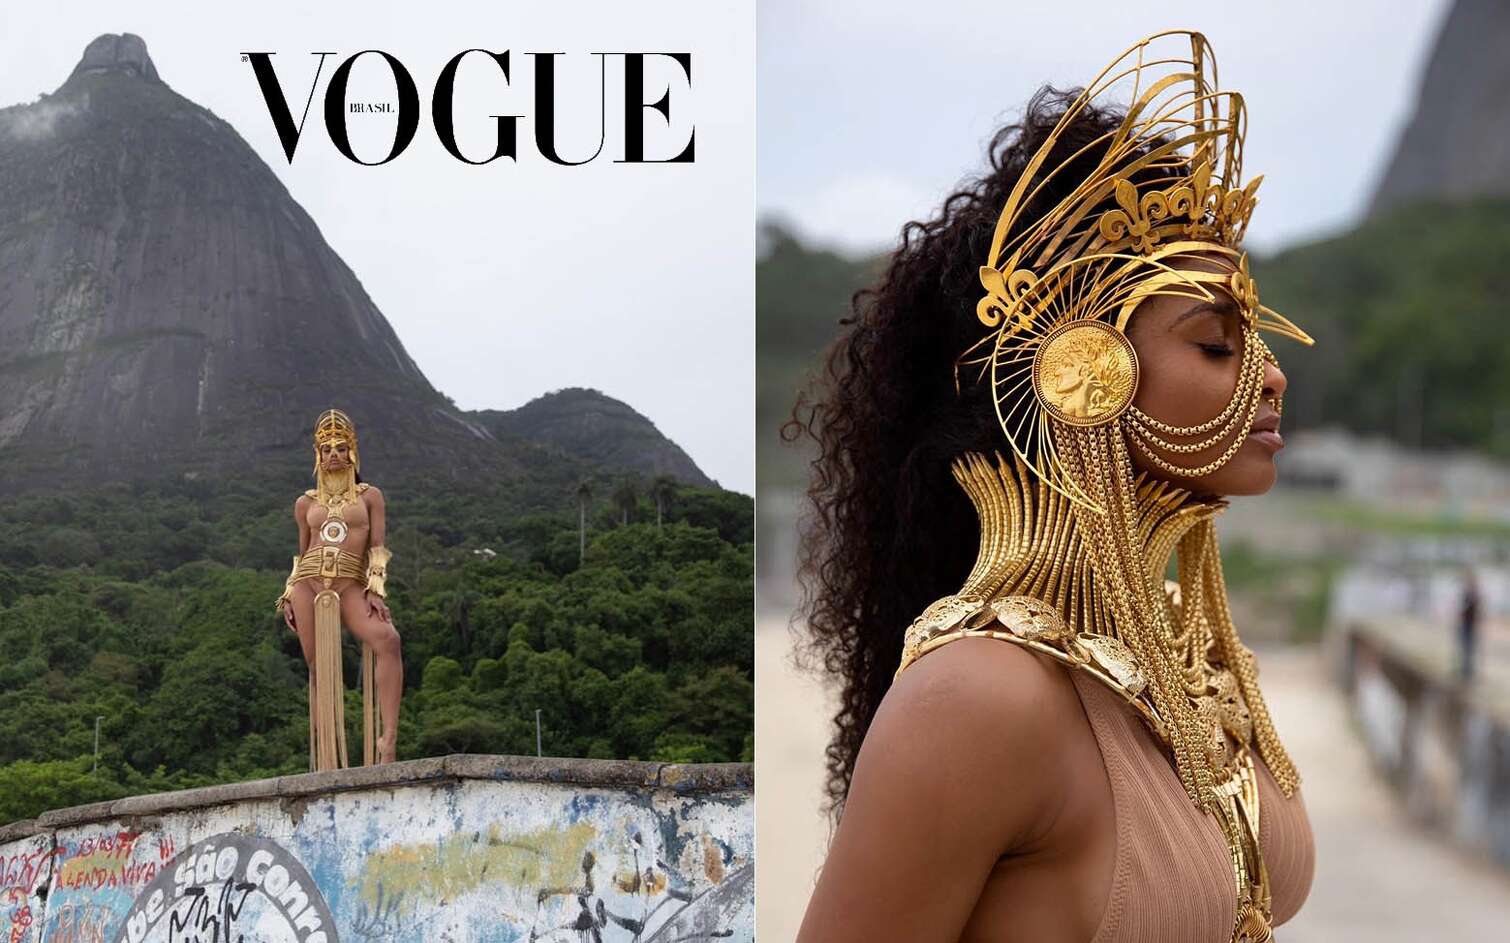 Vogue_Brasil_dub1.jpg